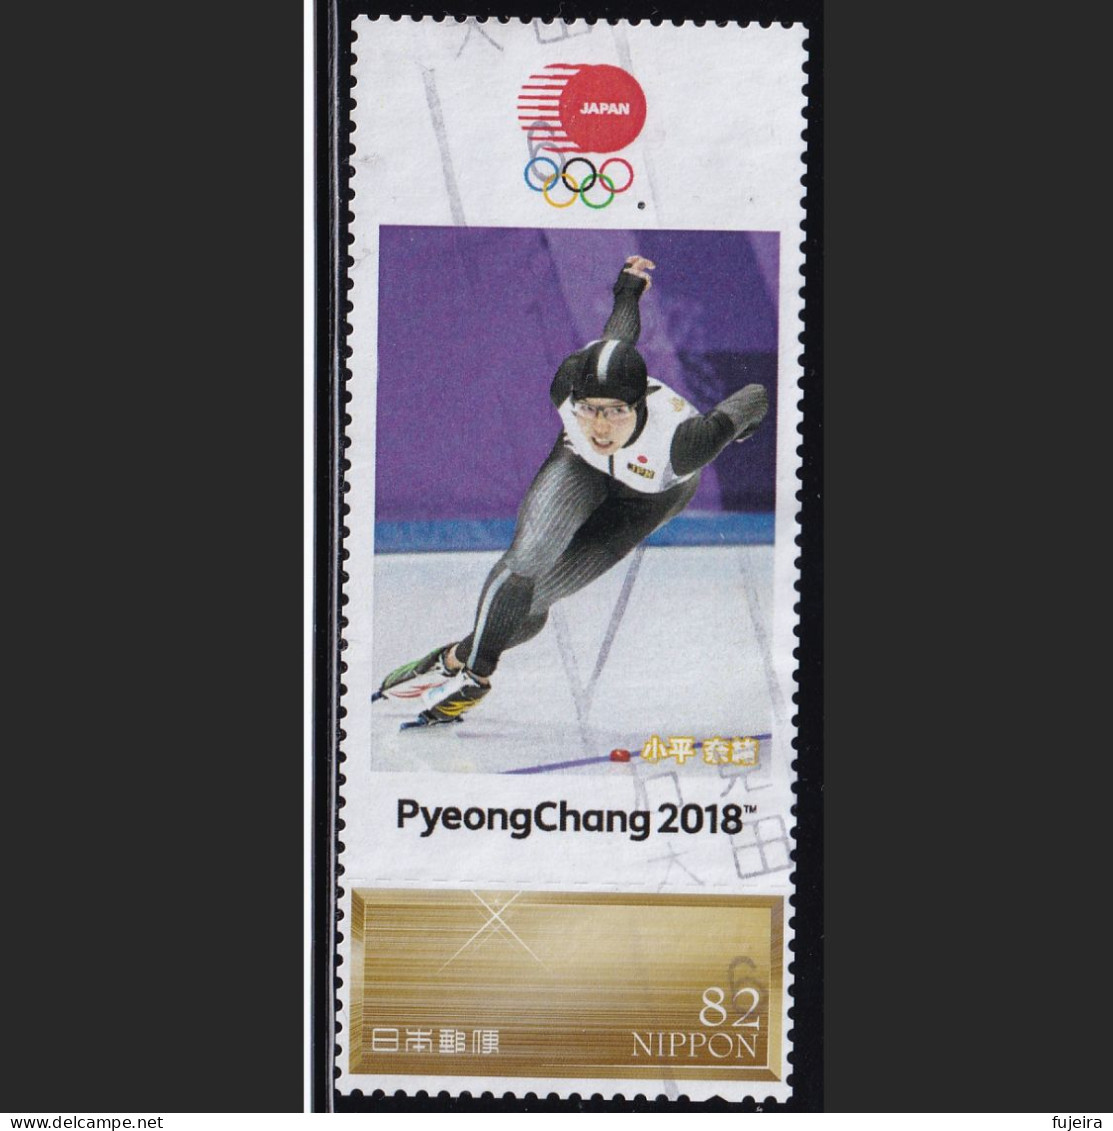 Japan Personalized Stamp, Olympic Games PyeongChang 2018 Skate Kodaira Nao (jpv9996) Used - Gebraucht